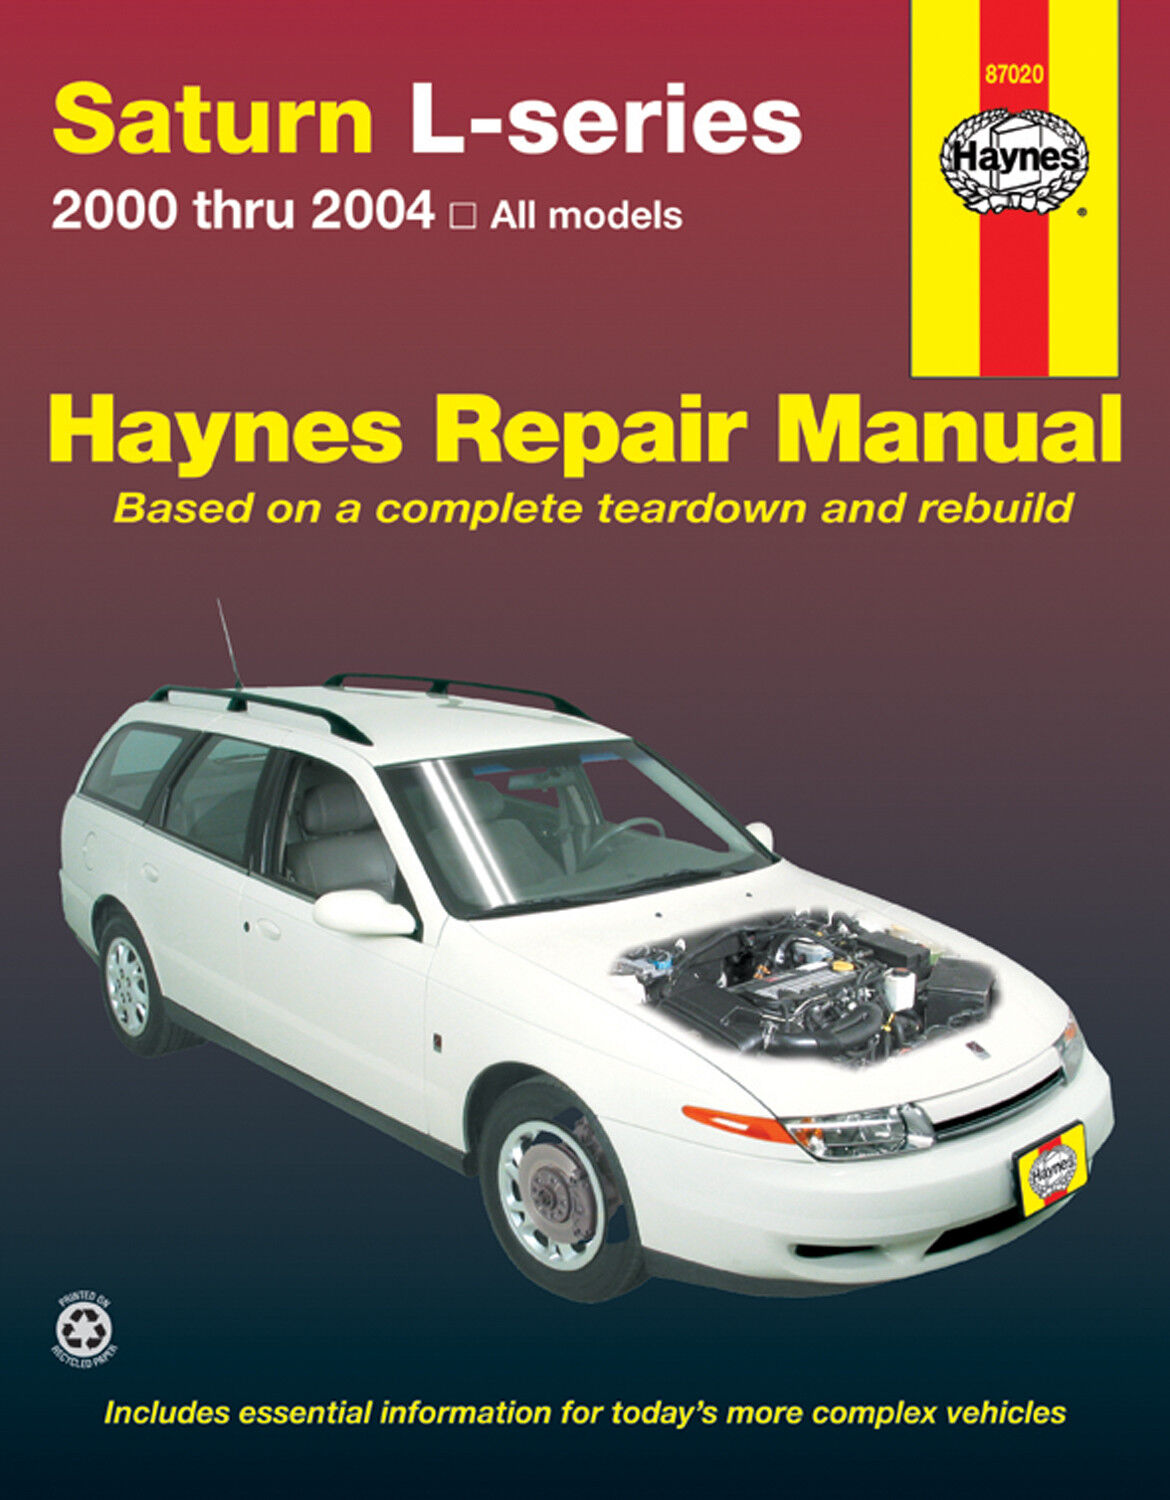 Haynes Publications 87020 Repair Manual